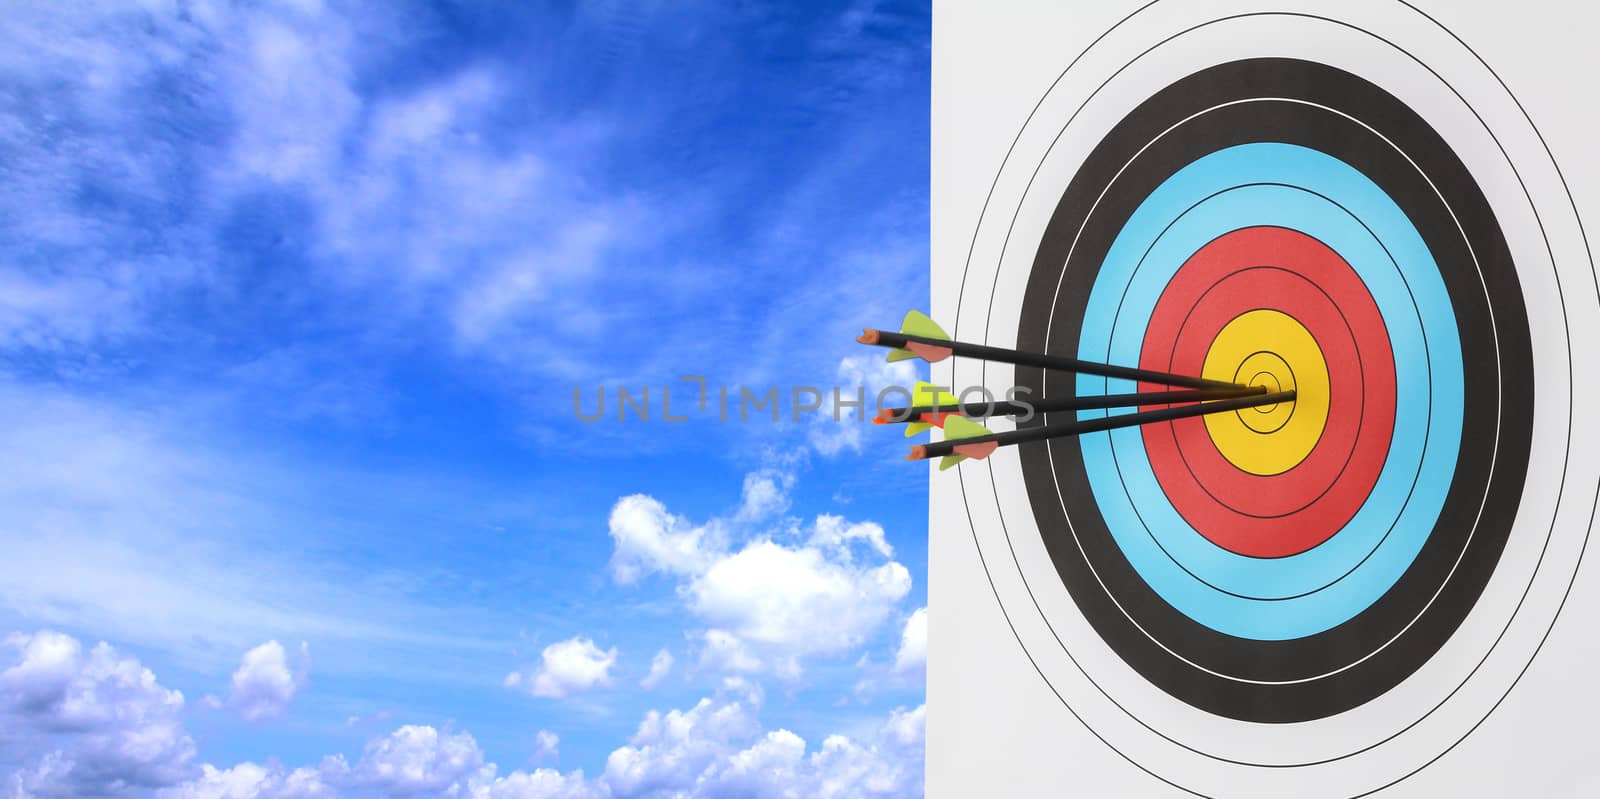 Archery target with arrow  by wyoosumran